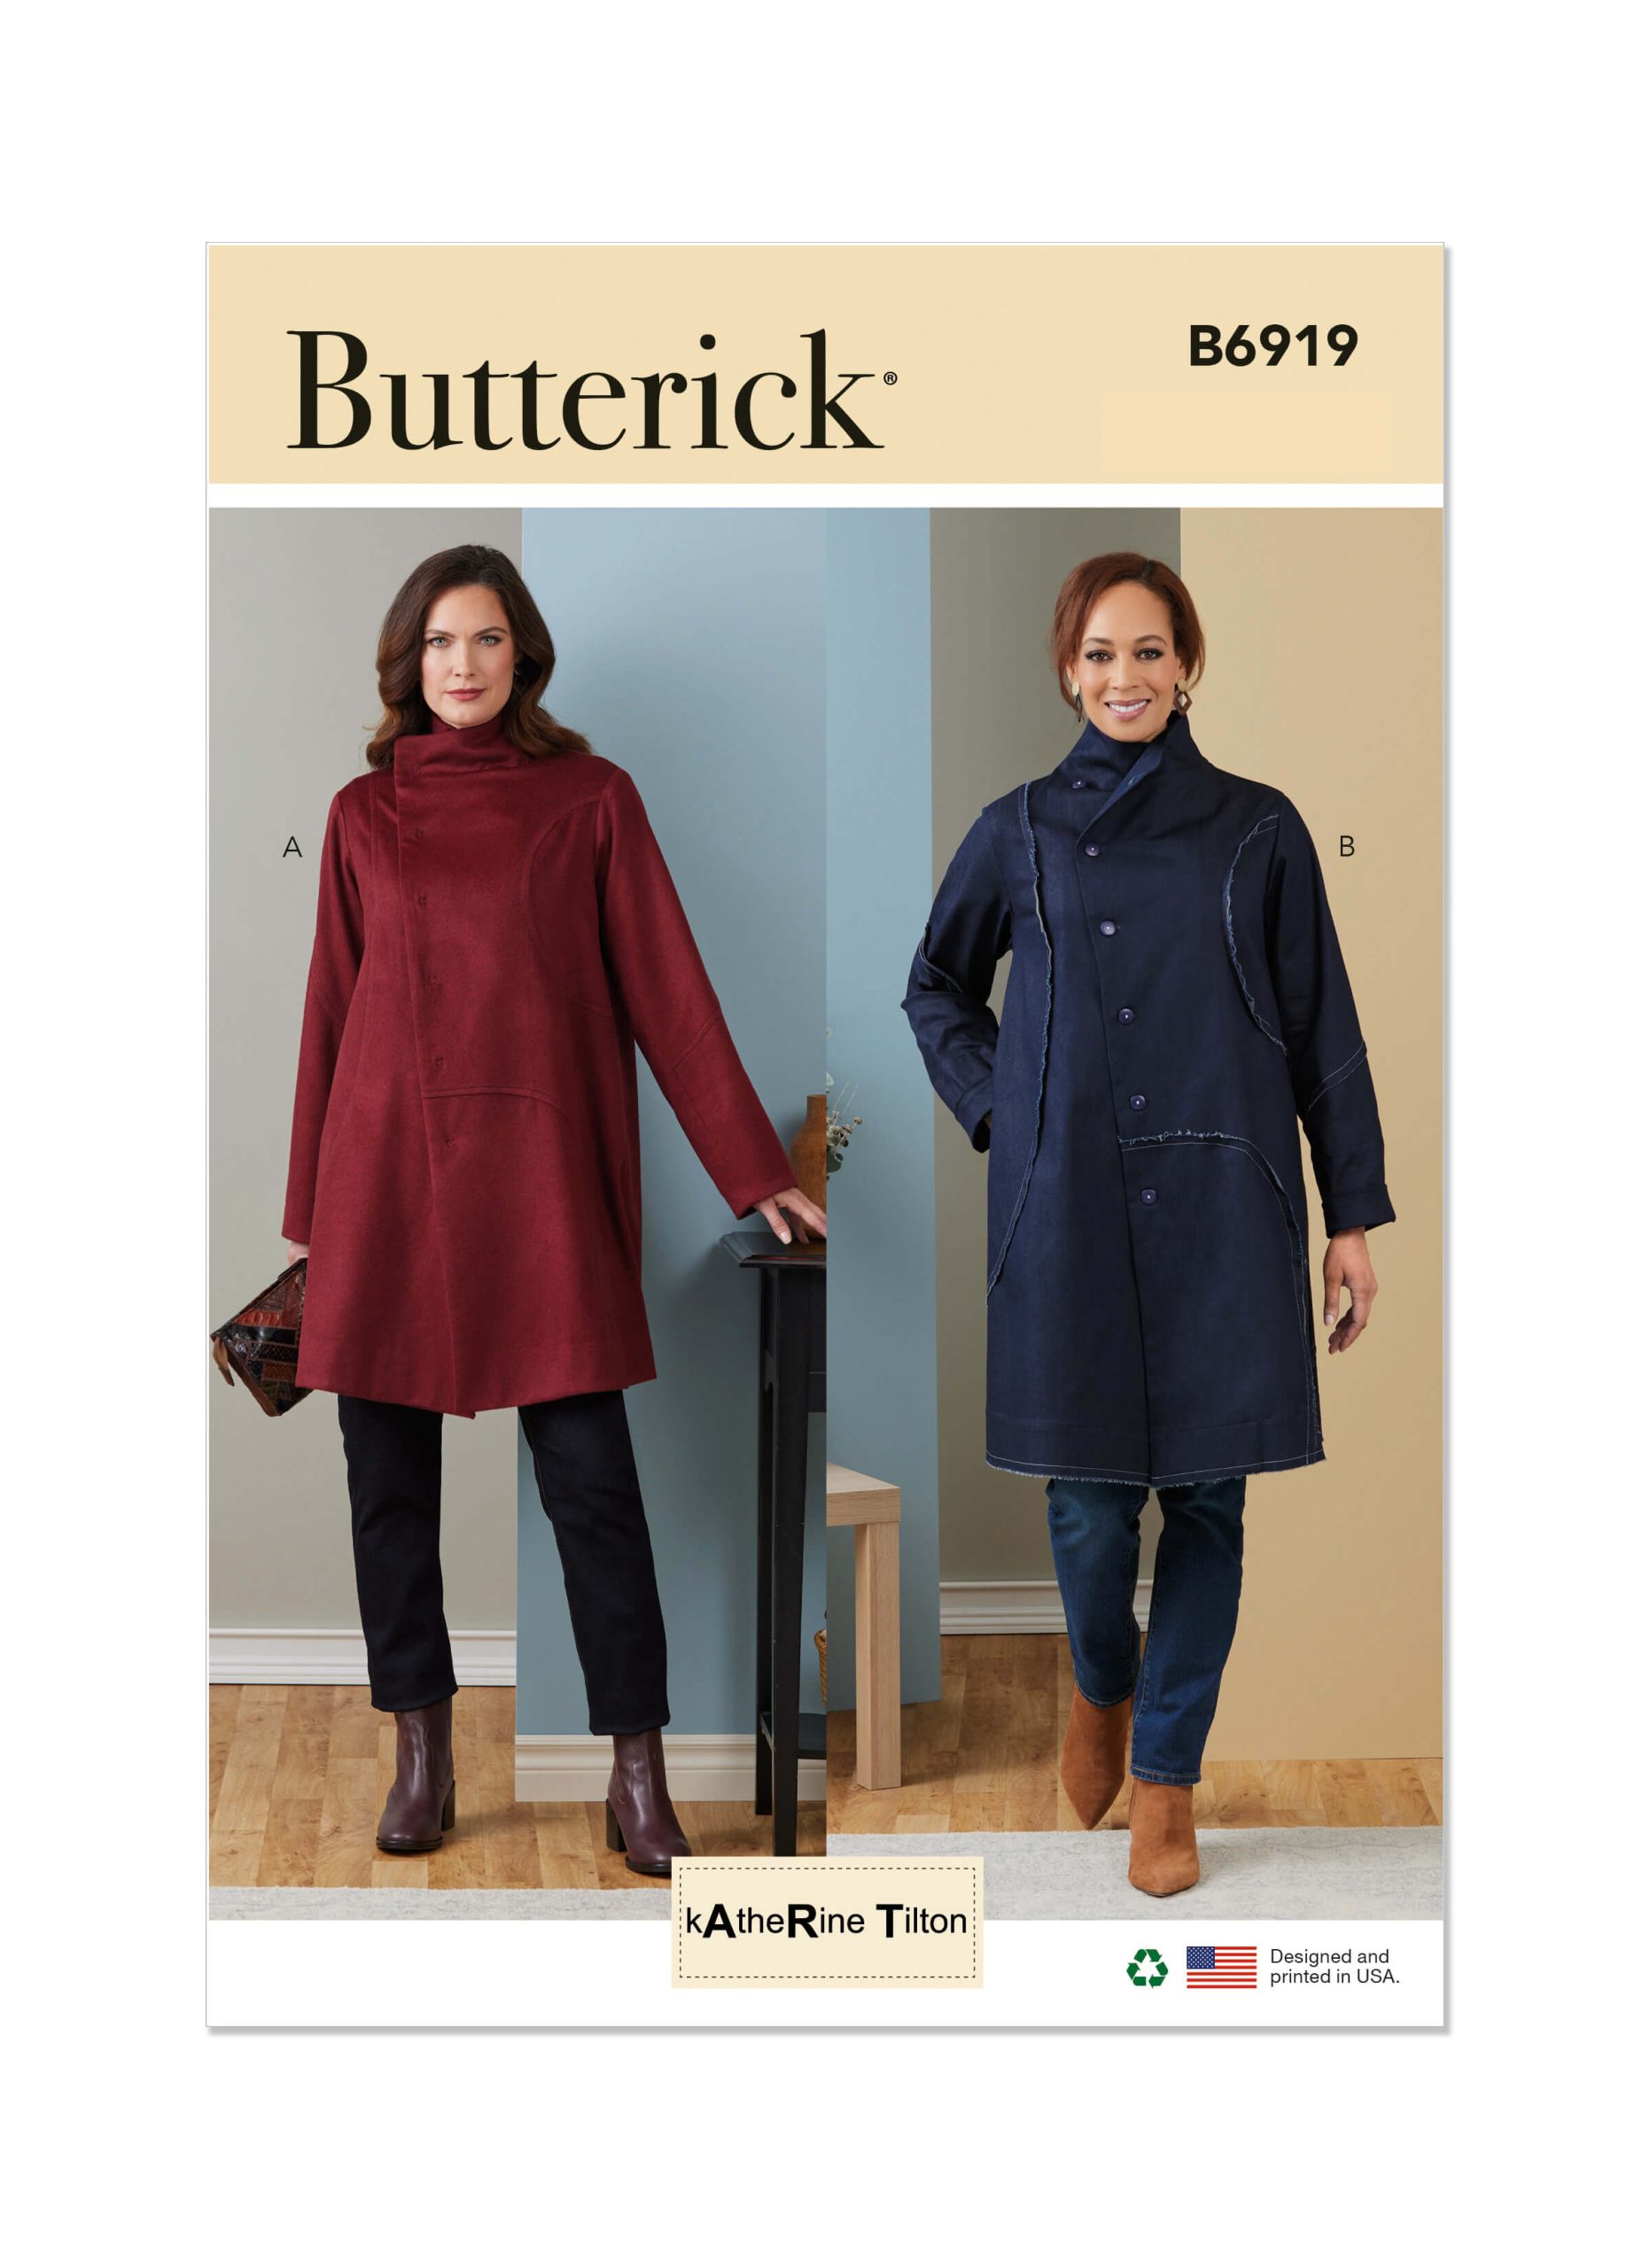 Butterick Sewing Pattern B6919 Misses' Coat by Katherine Tilton